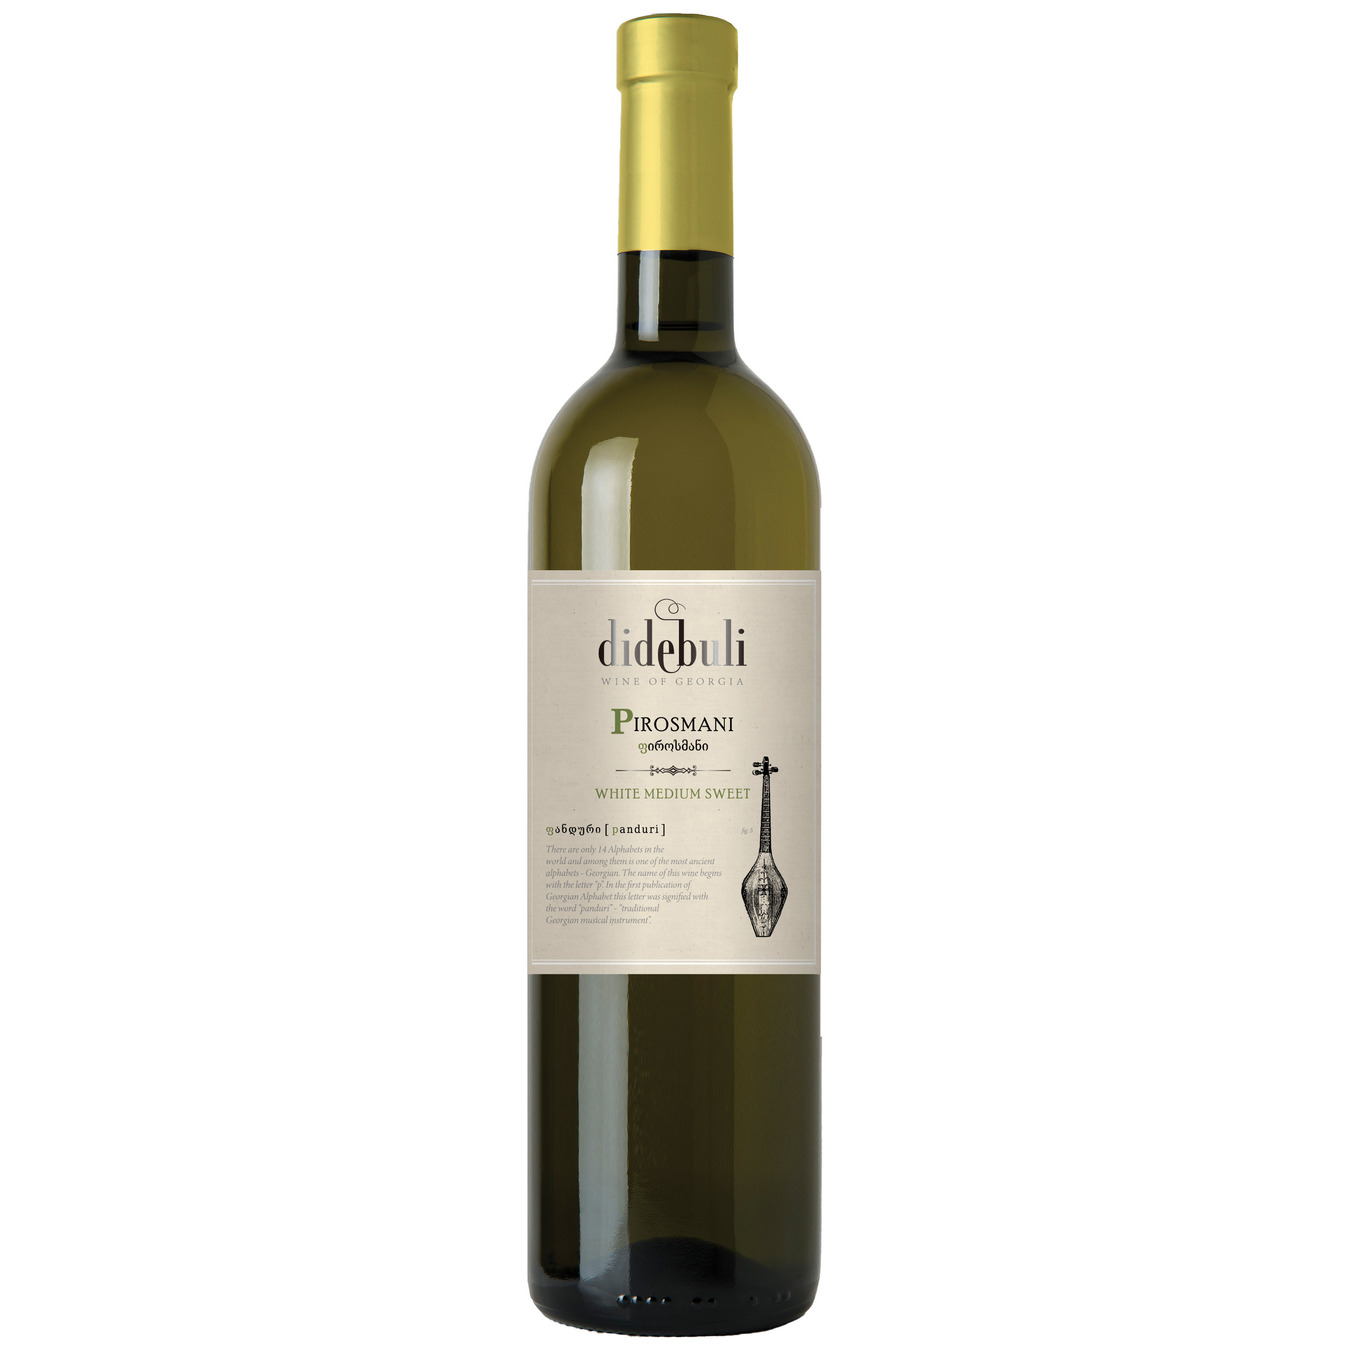 Didebuli Pirosmani white semi-sweet wine 11% 0.75 l